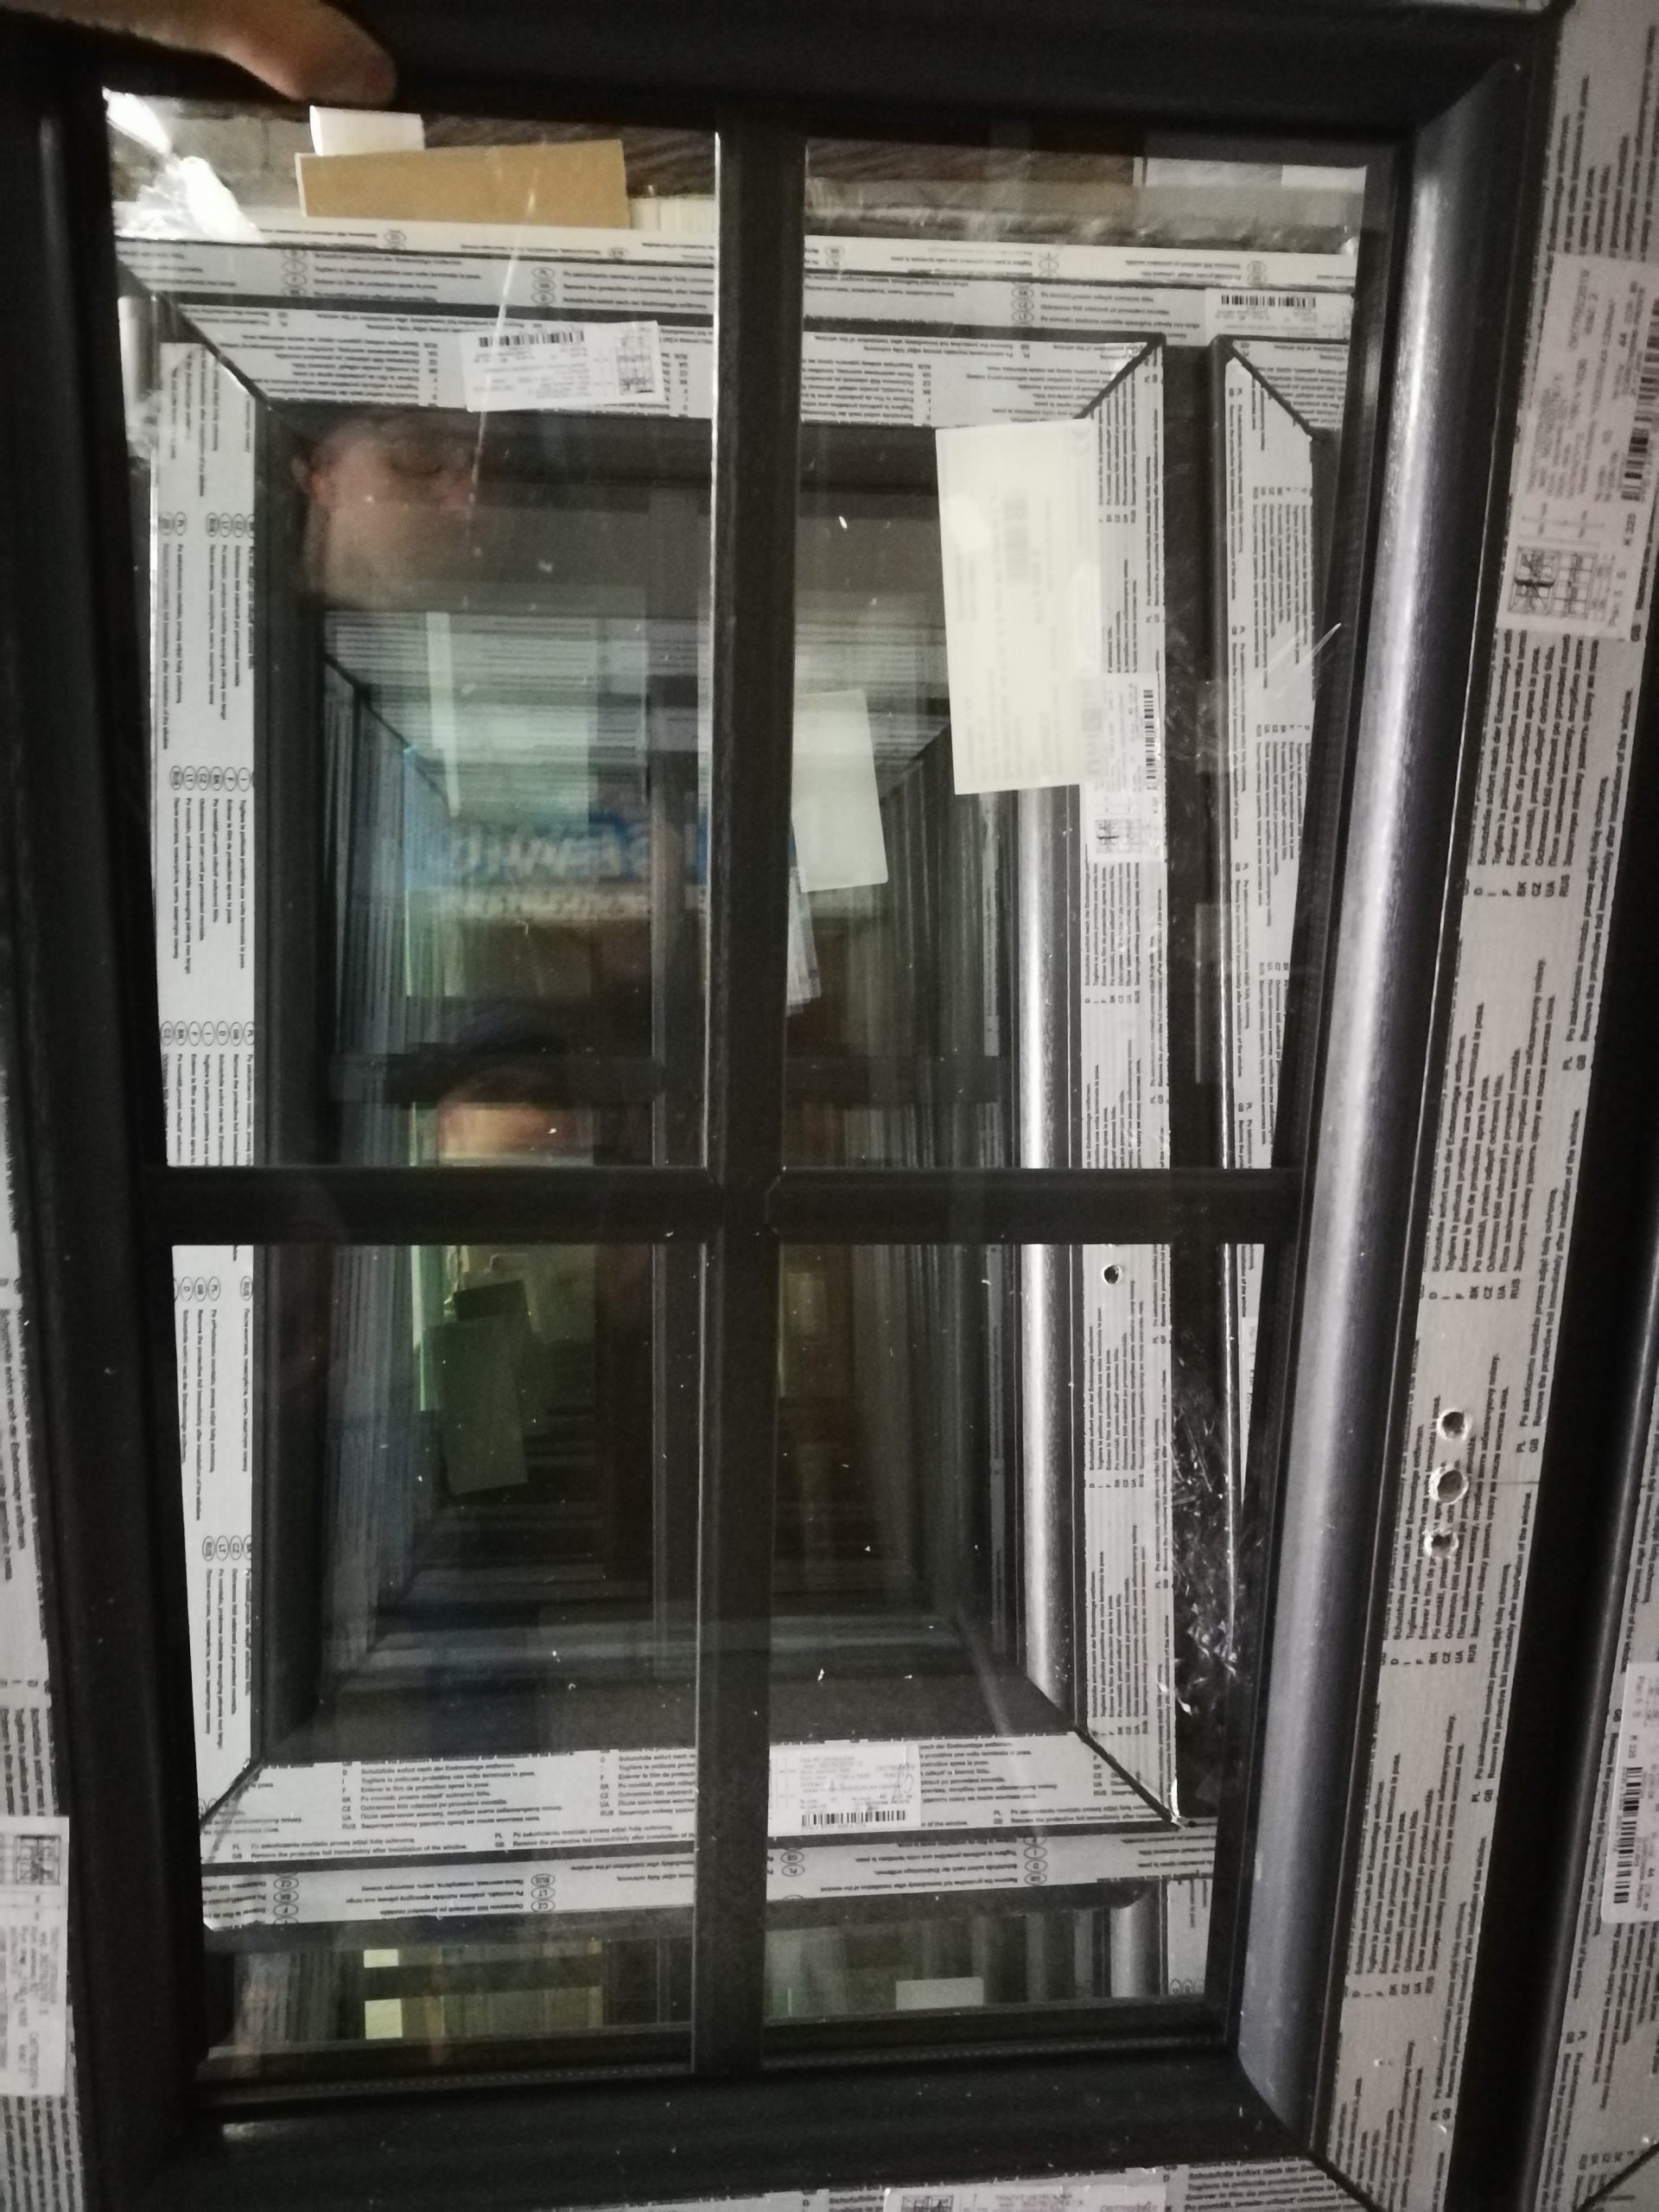 Inside-glazing muntin bars